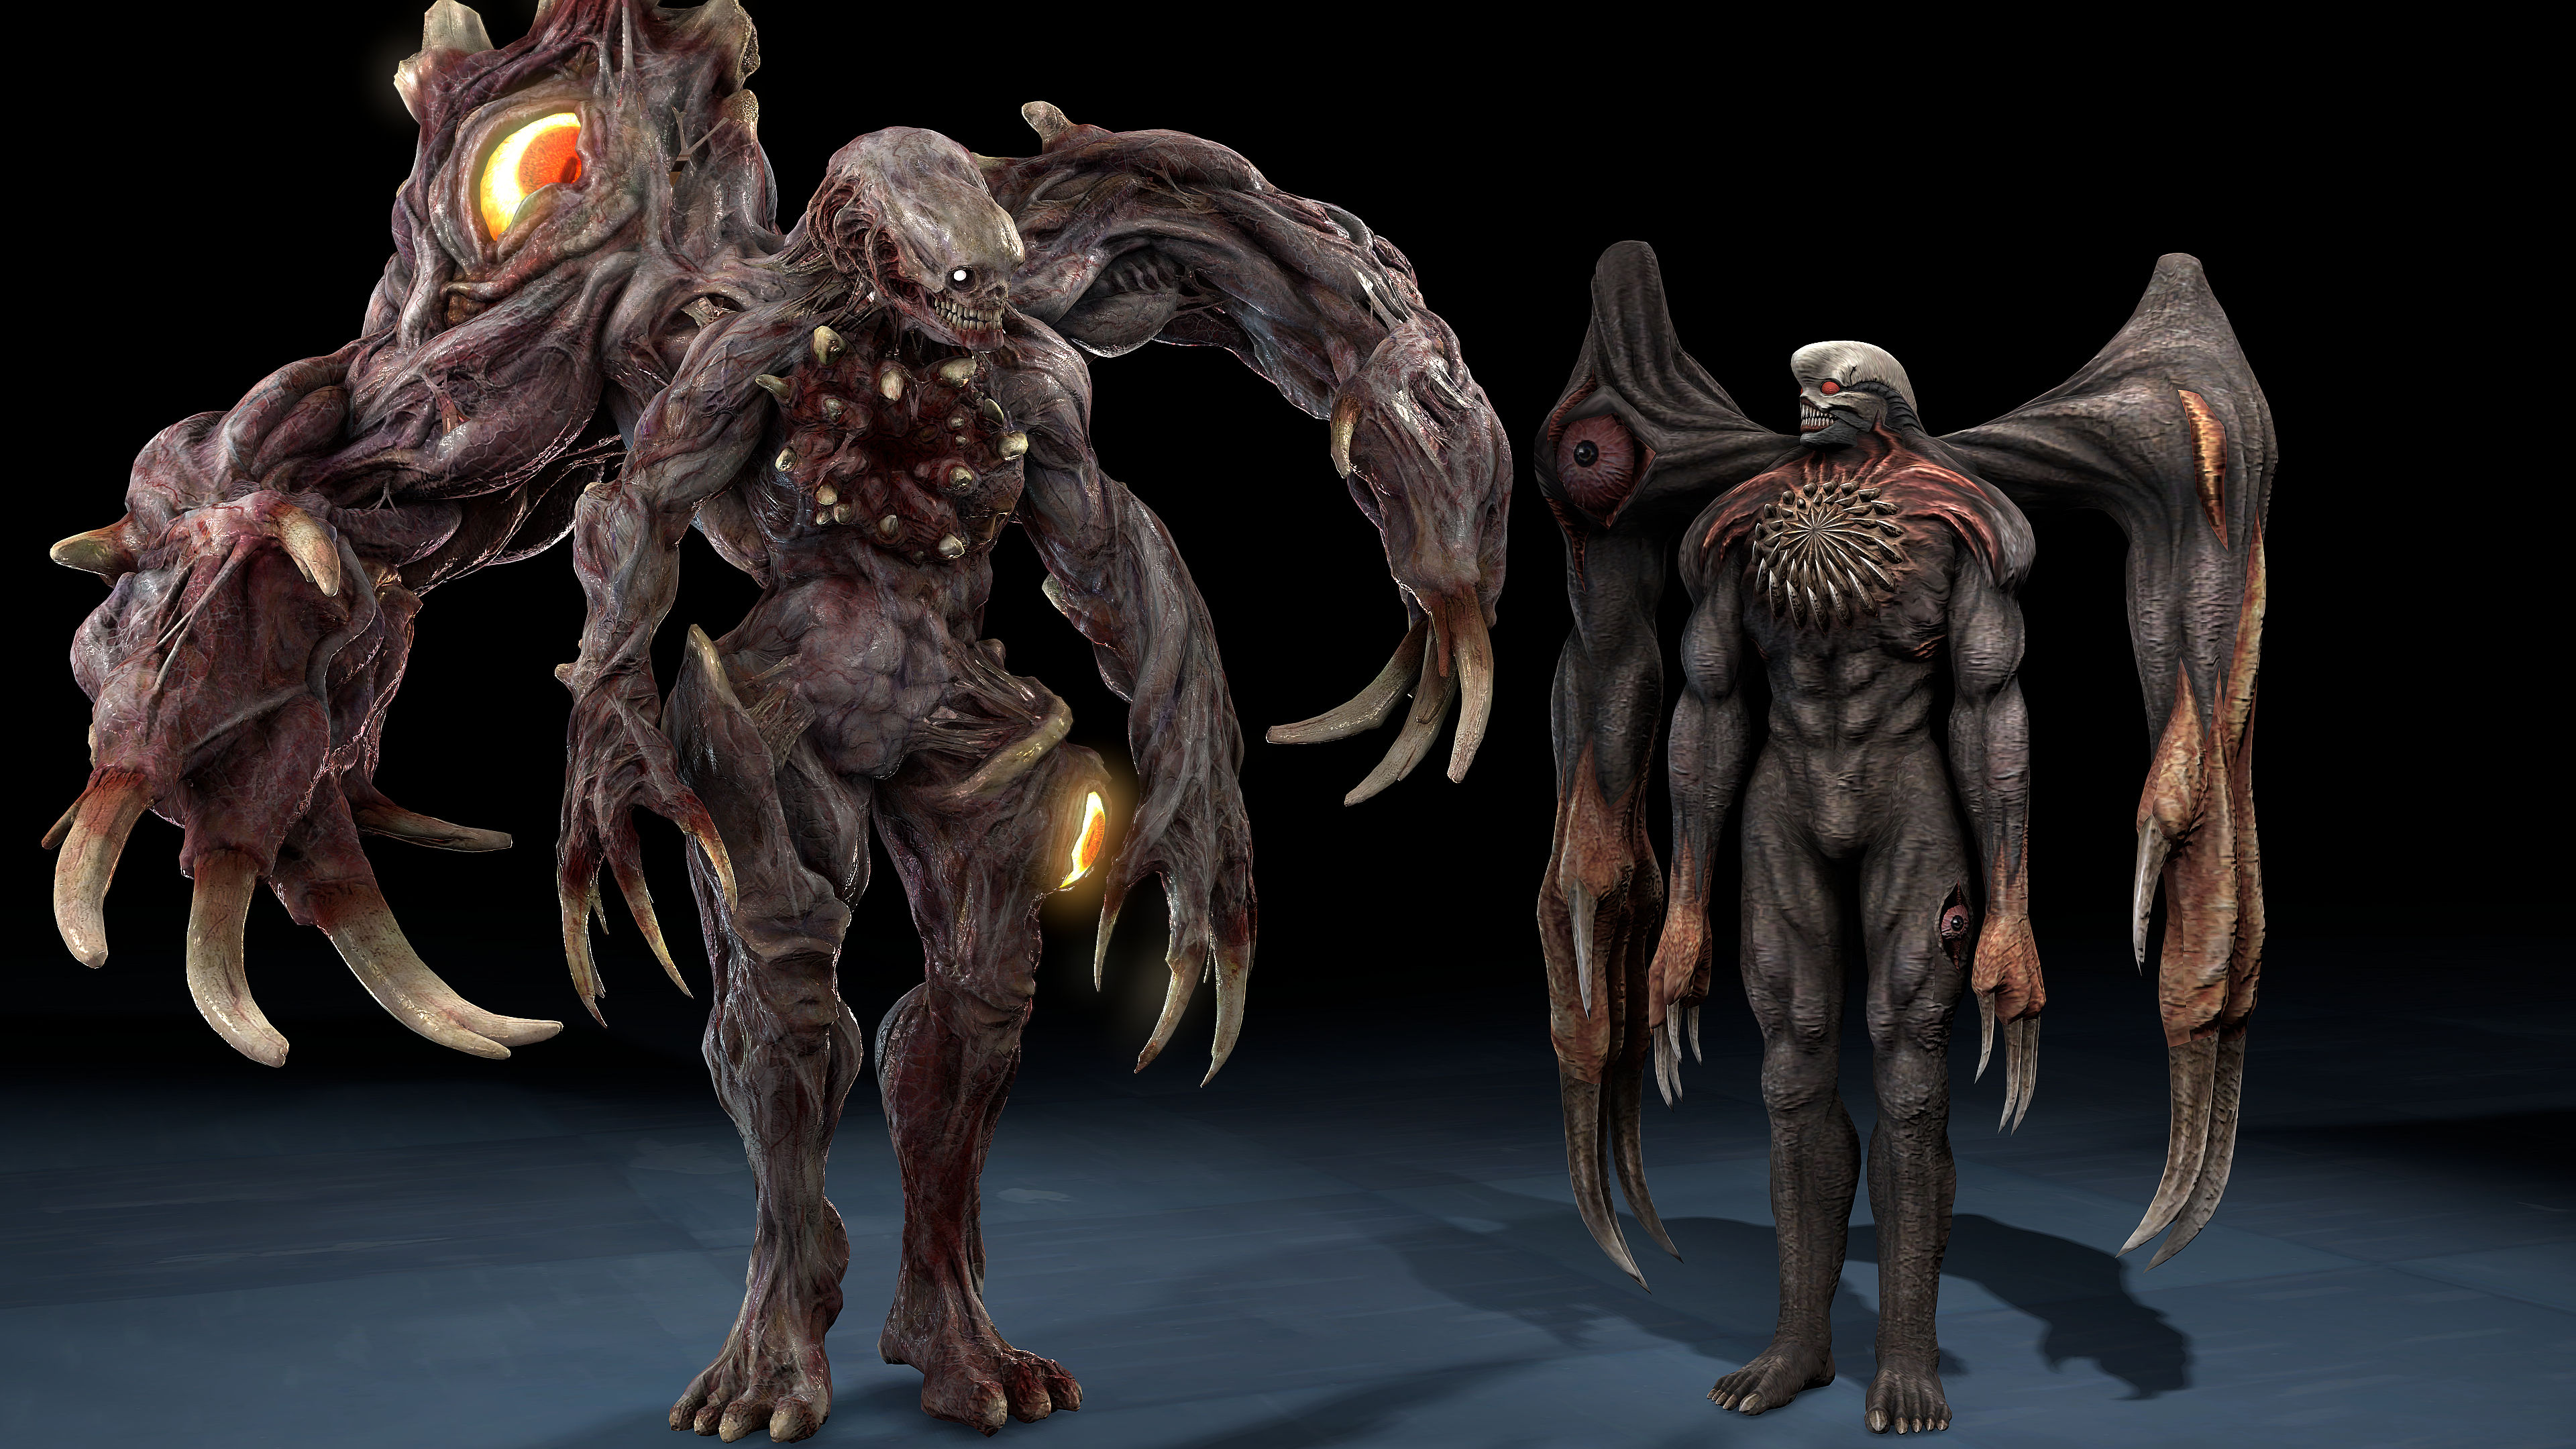 William Birkin from Resident Evil 2 already in the 3rd G-Virus transformati...